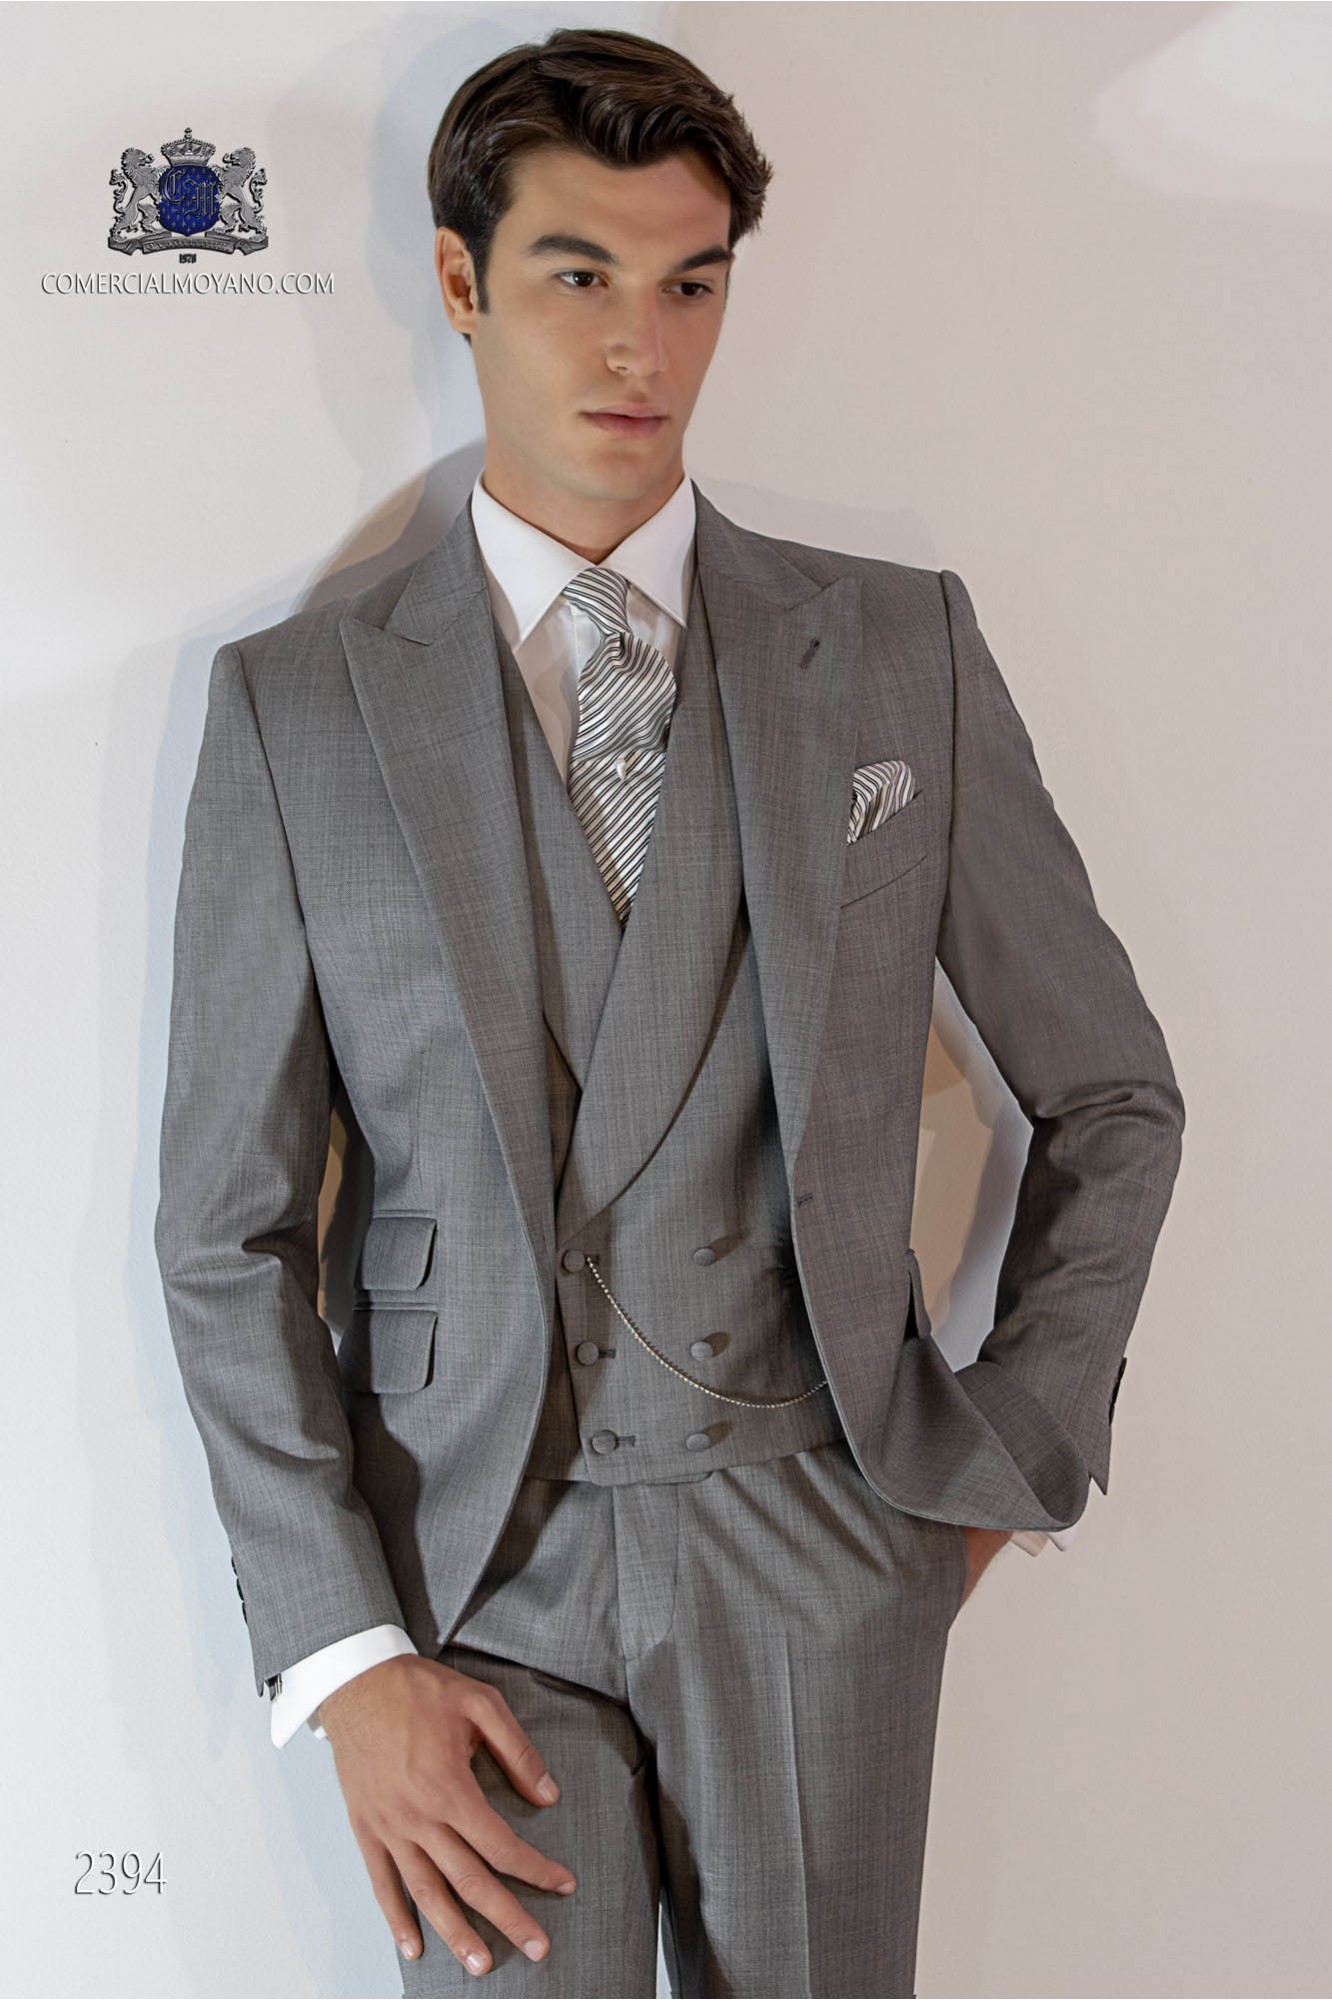 Traje a medida gris claro fil a fil mixto lana modelo: 2394 Mario Moyano colección Gentleman